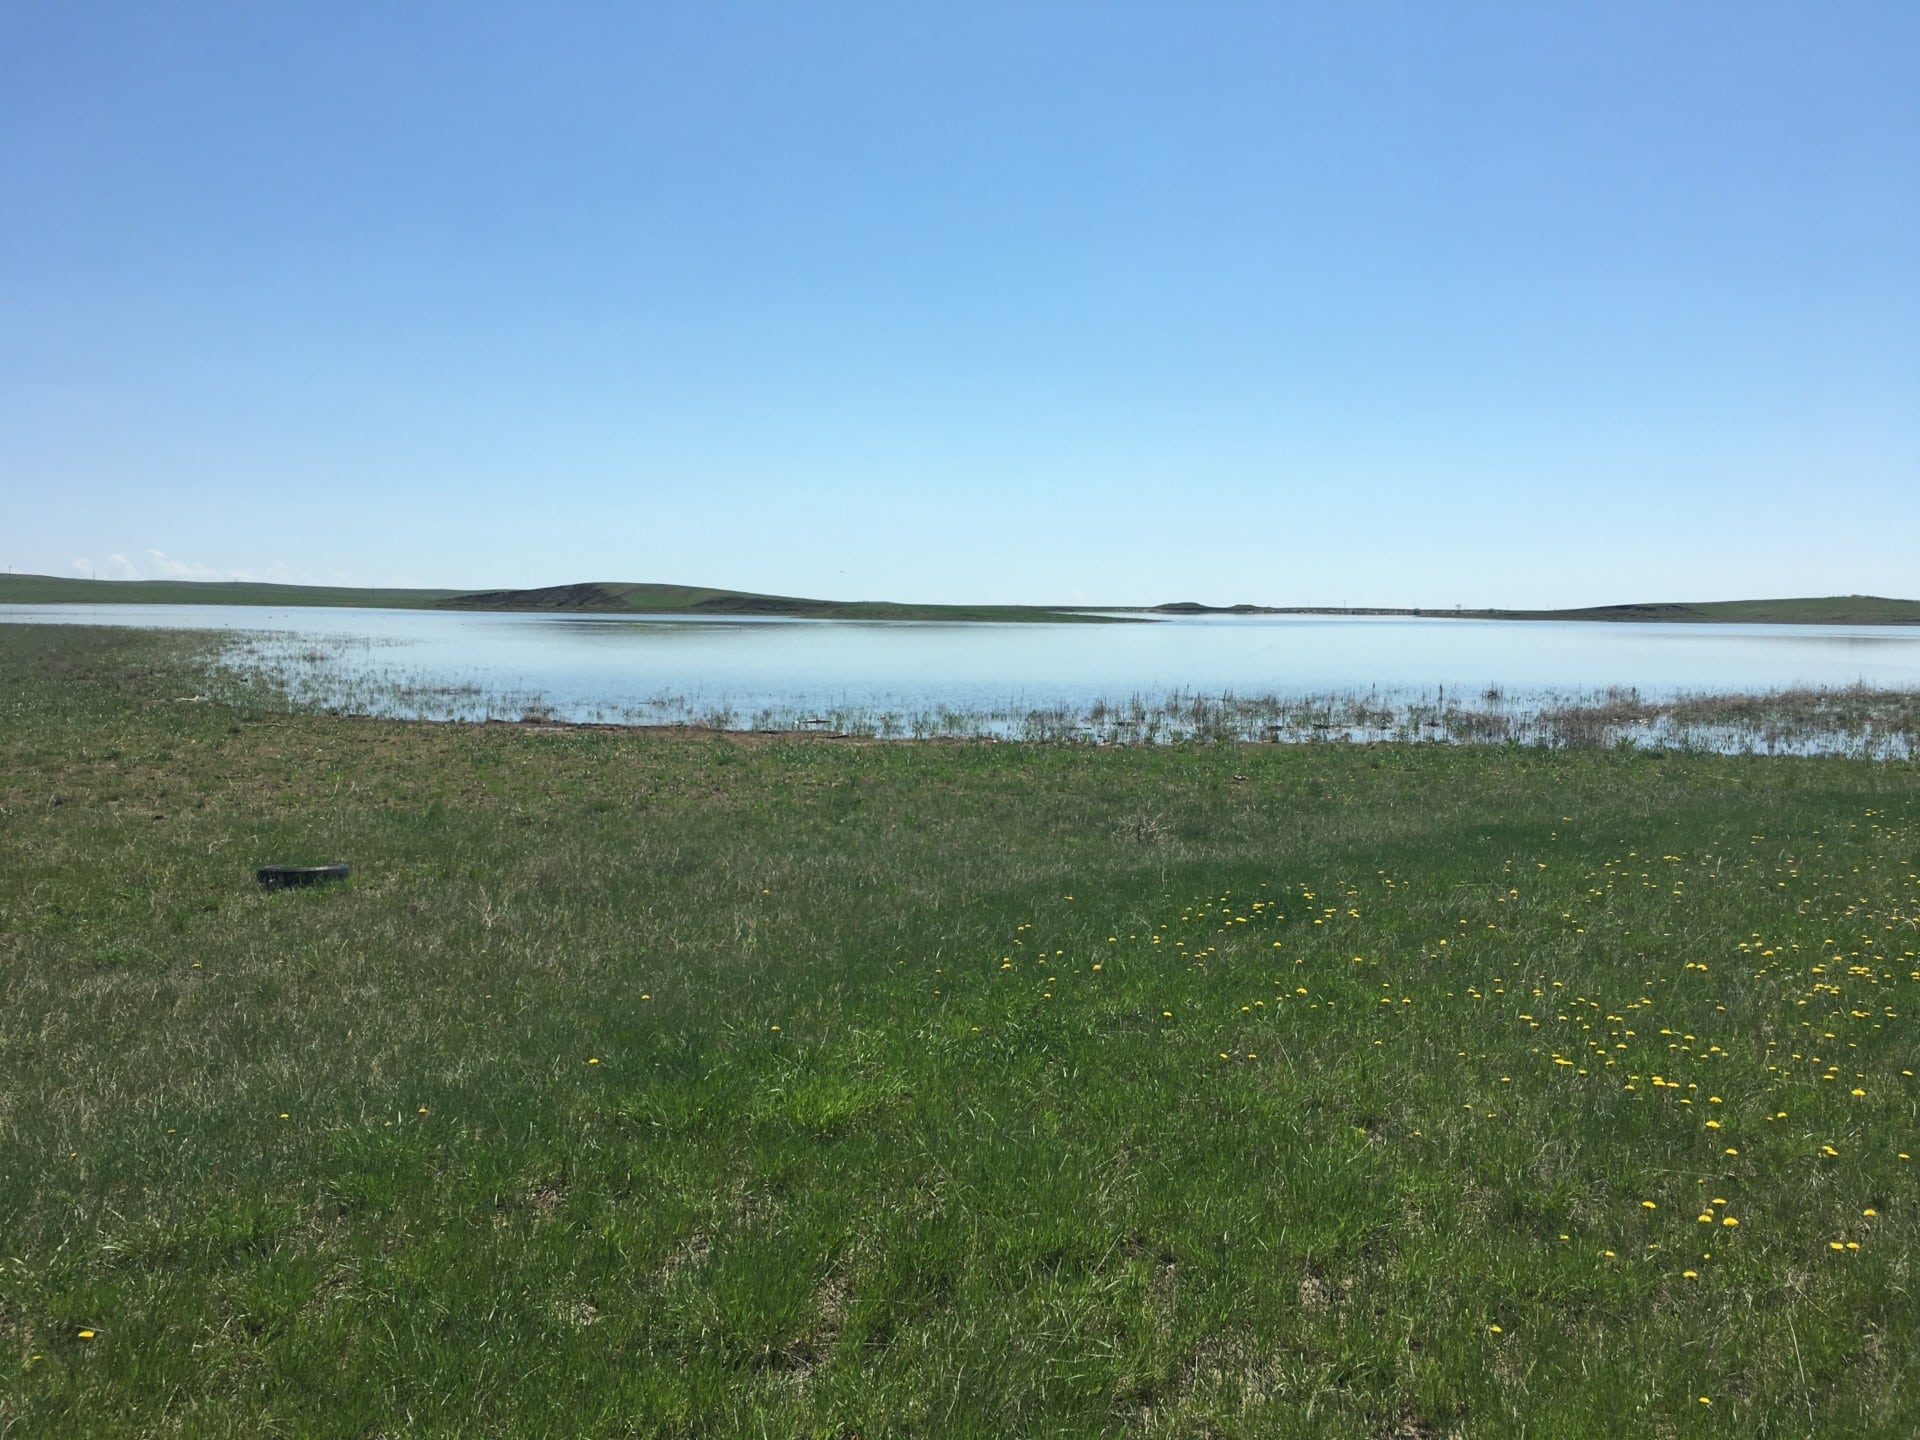 water source south dakota northern plains grassland cattle ranch